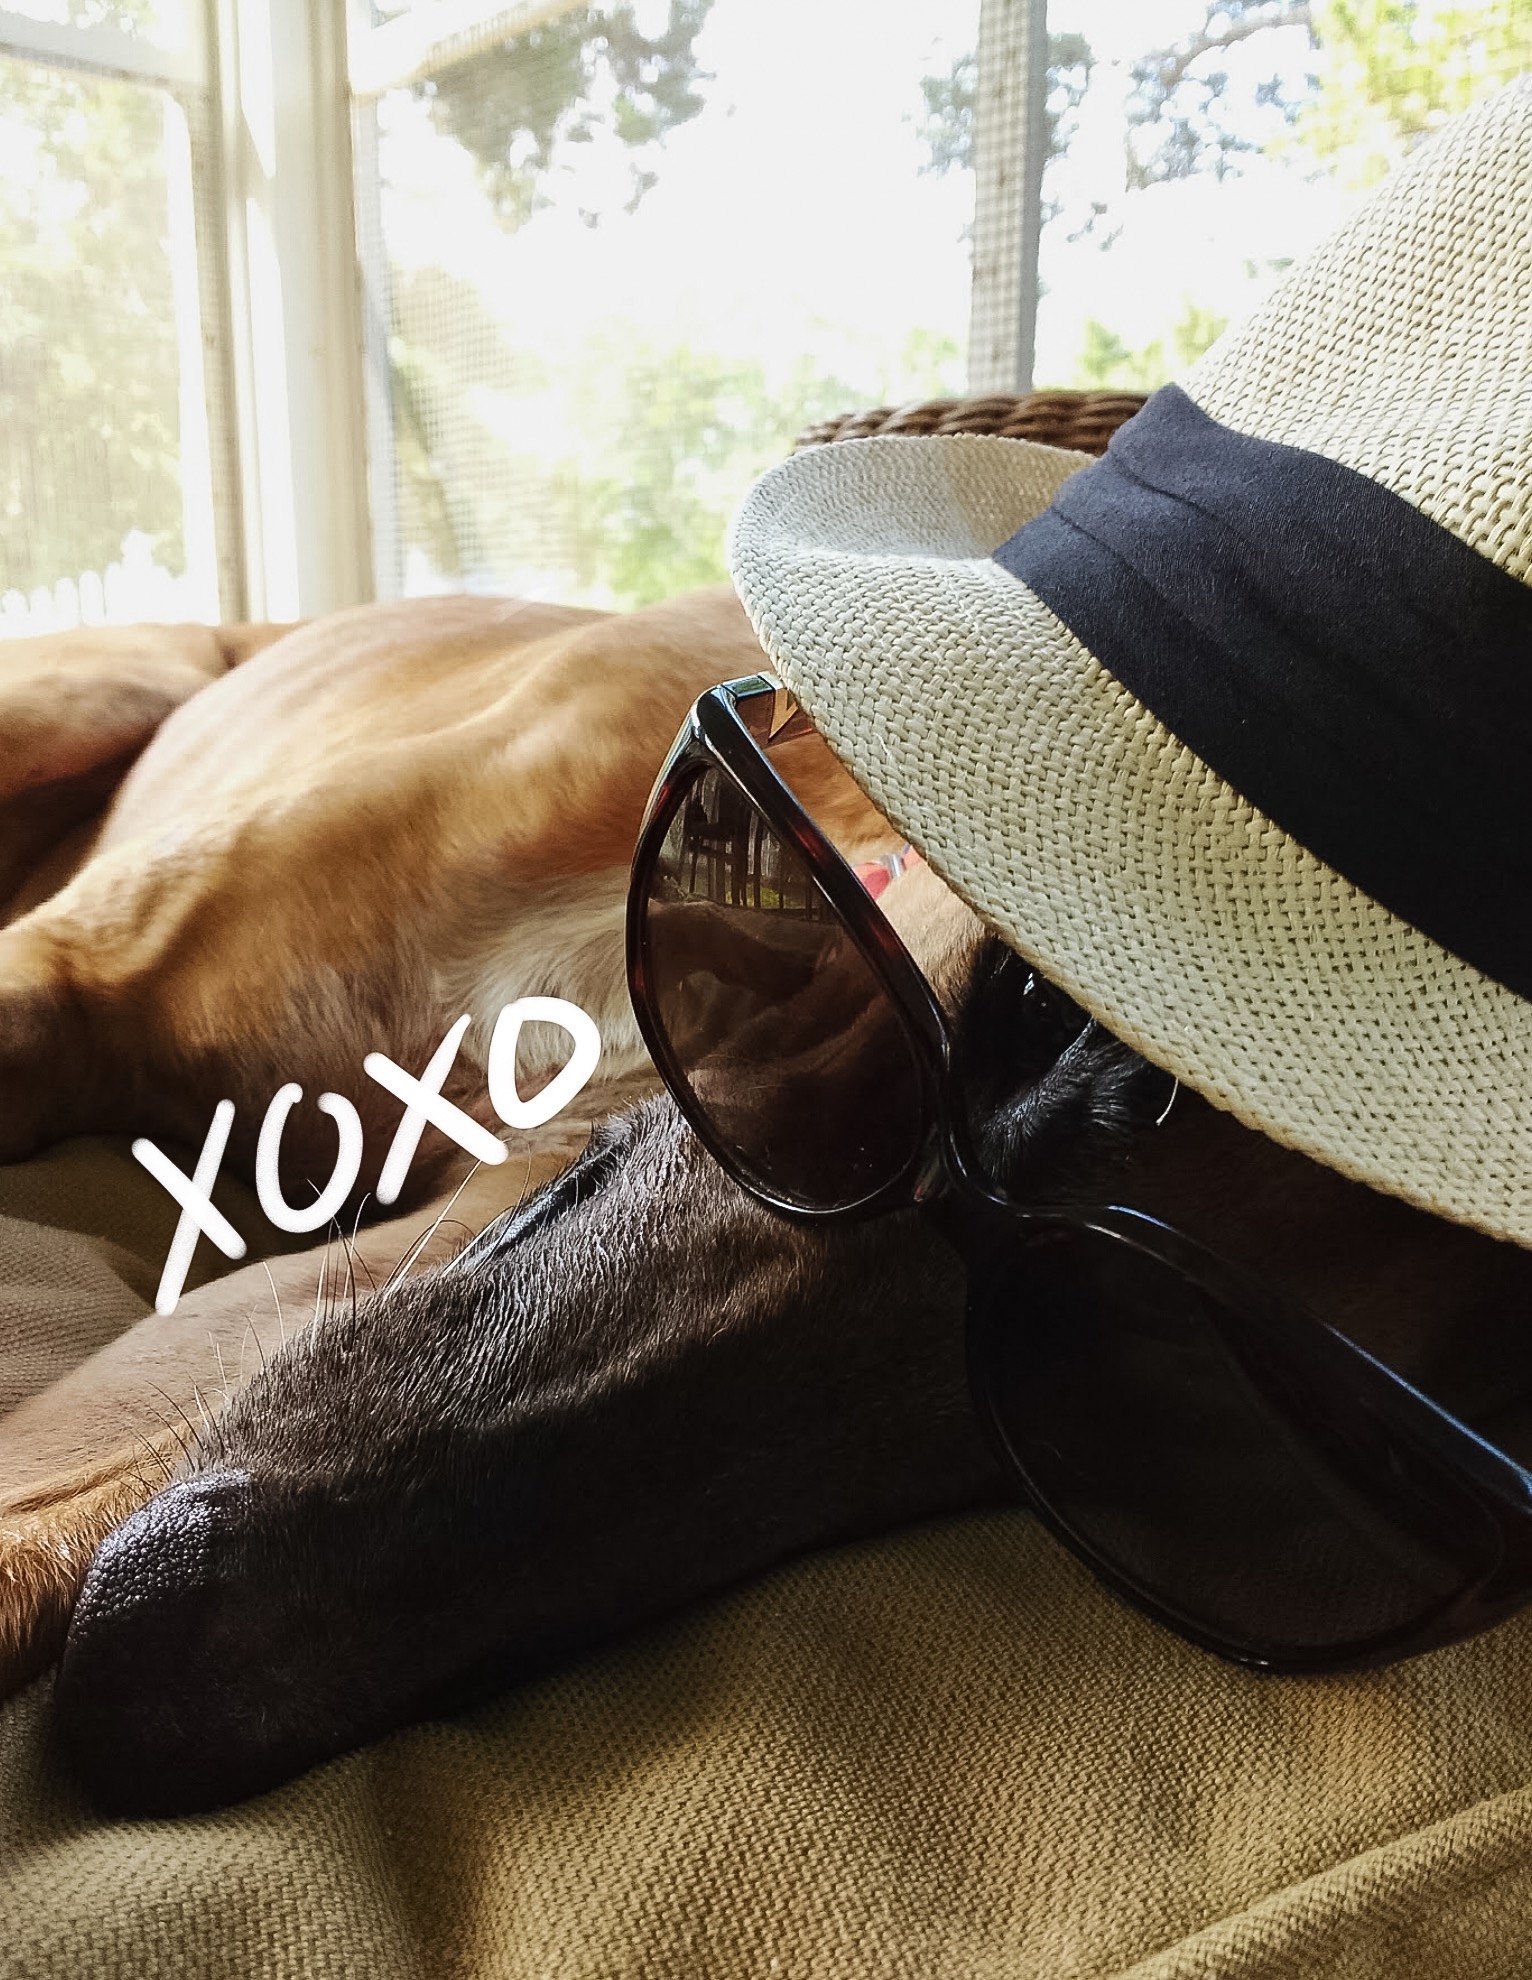 Summer, sunglasses, and booze hound.